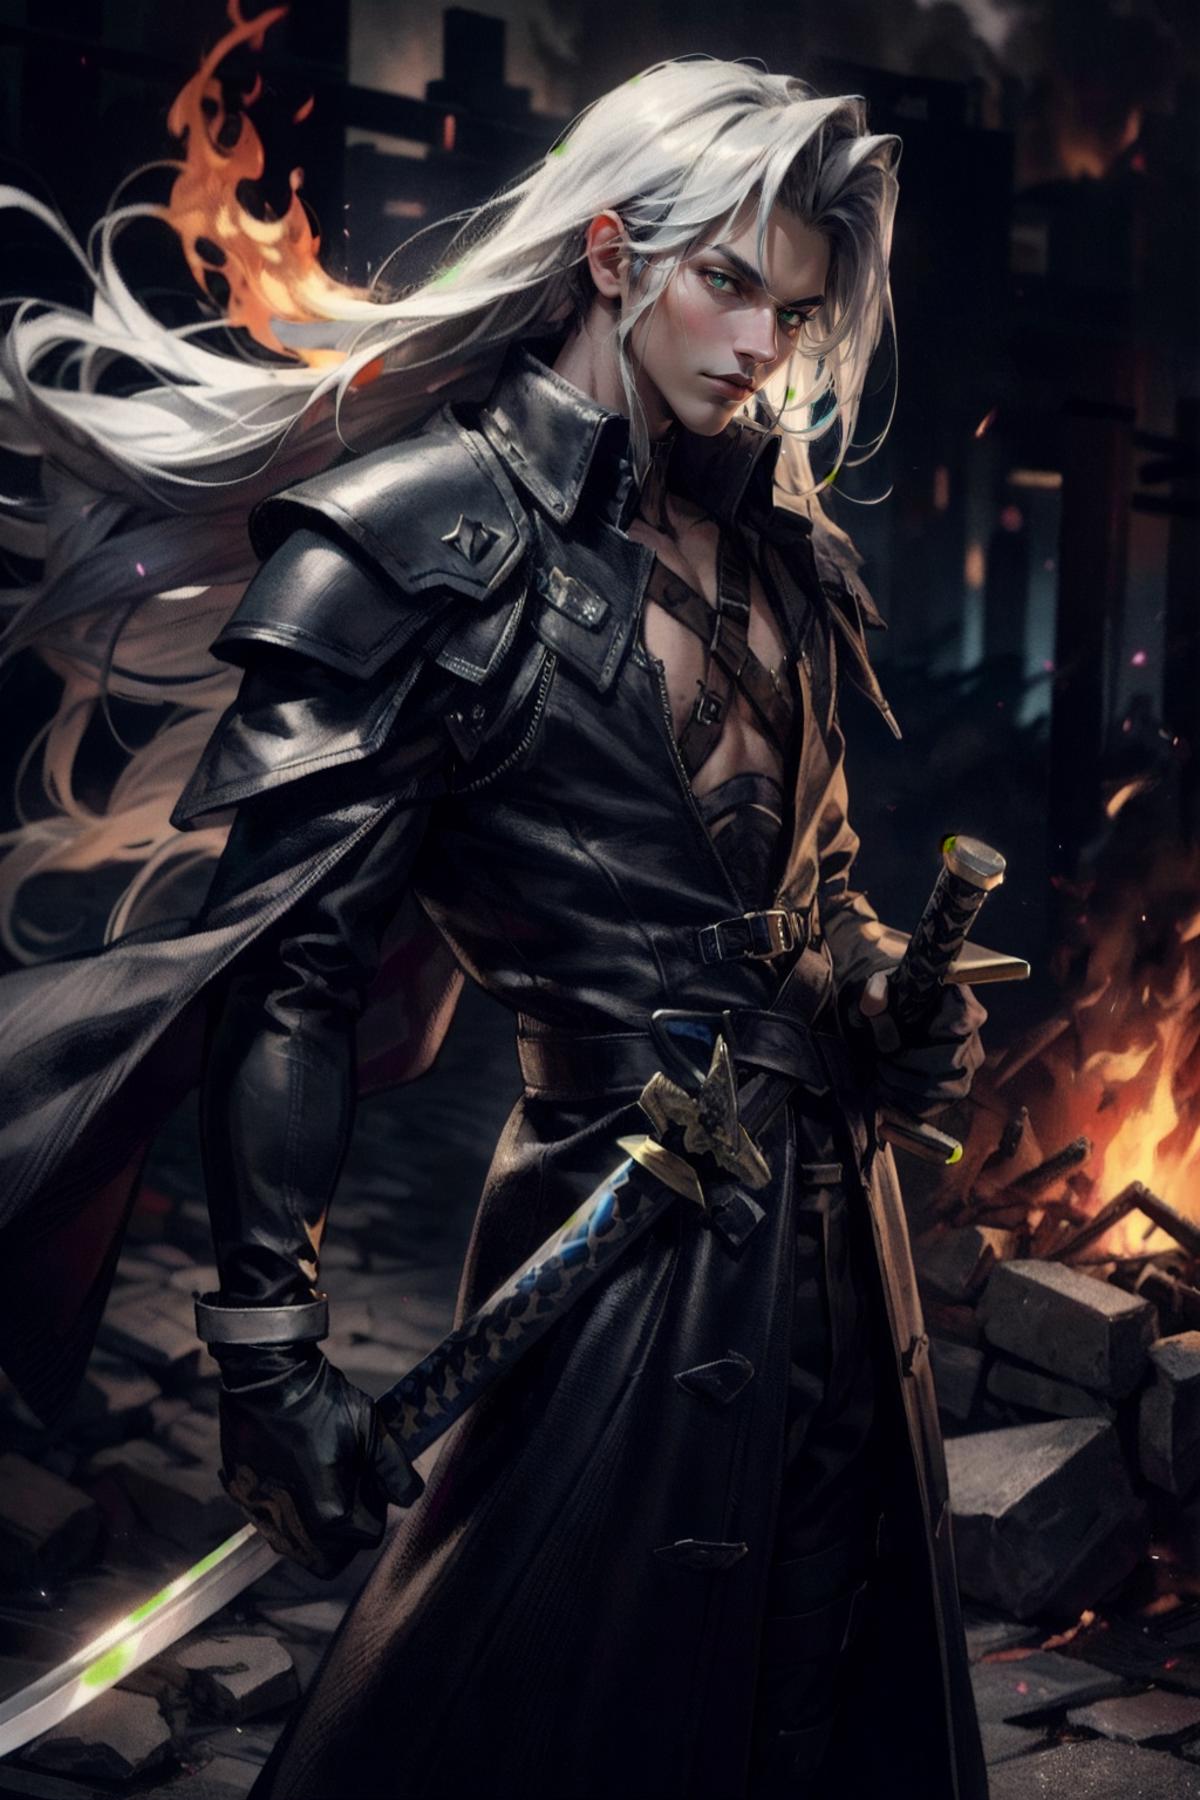 Sephiroth (Final Fantasy) image by 0_vortex